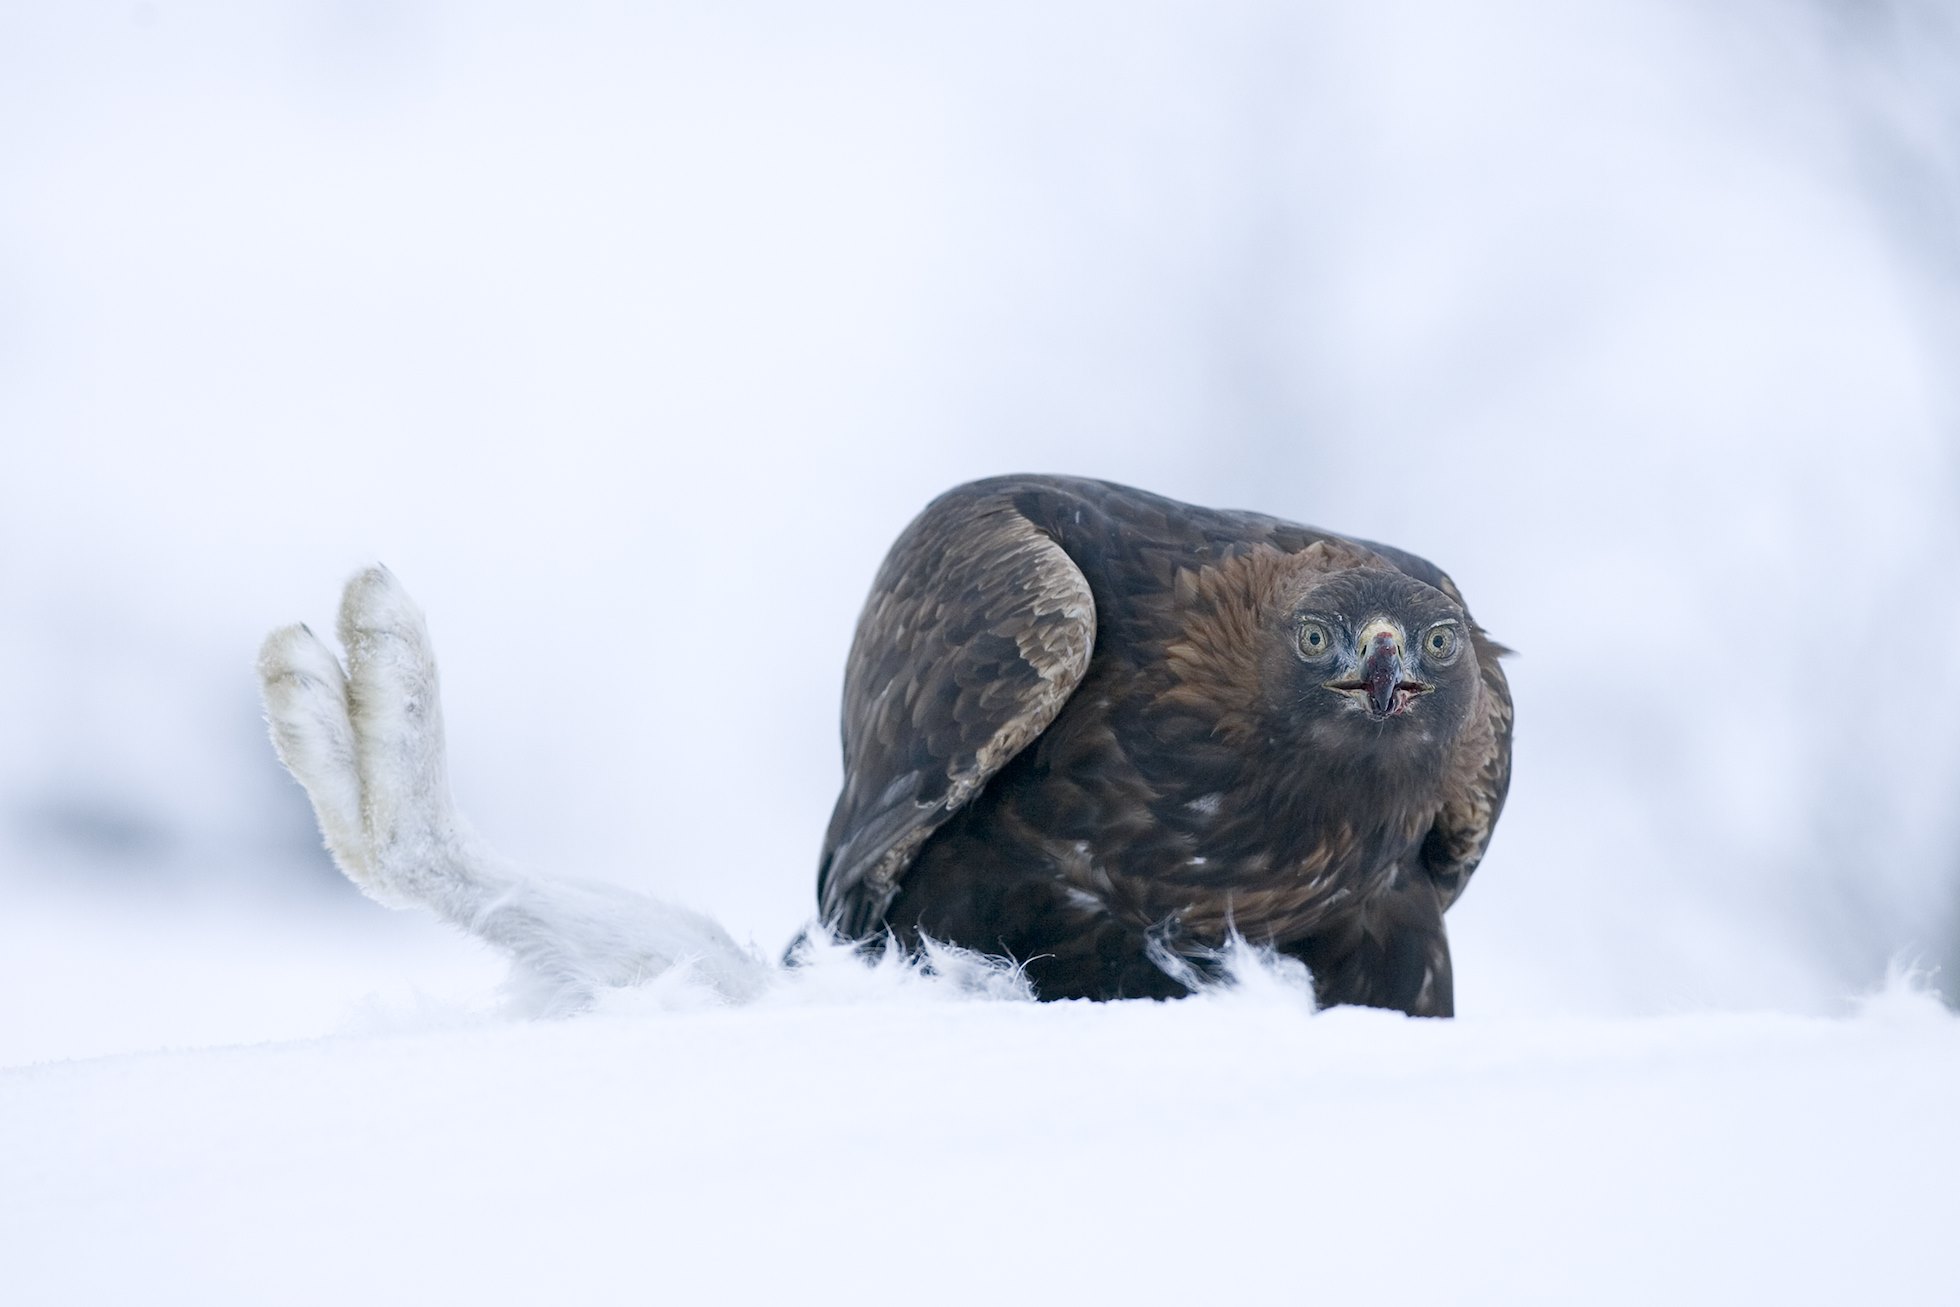 Golden eagle (Aquila chrysaetos) (c) feeding on mountain hare in winter, Scotland.